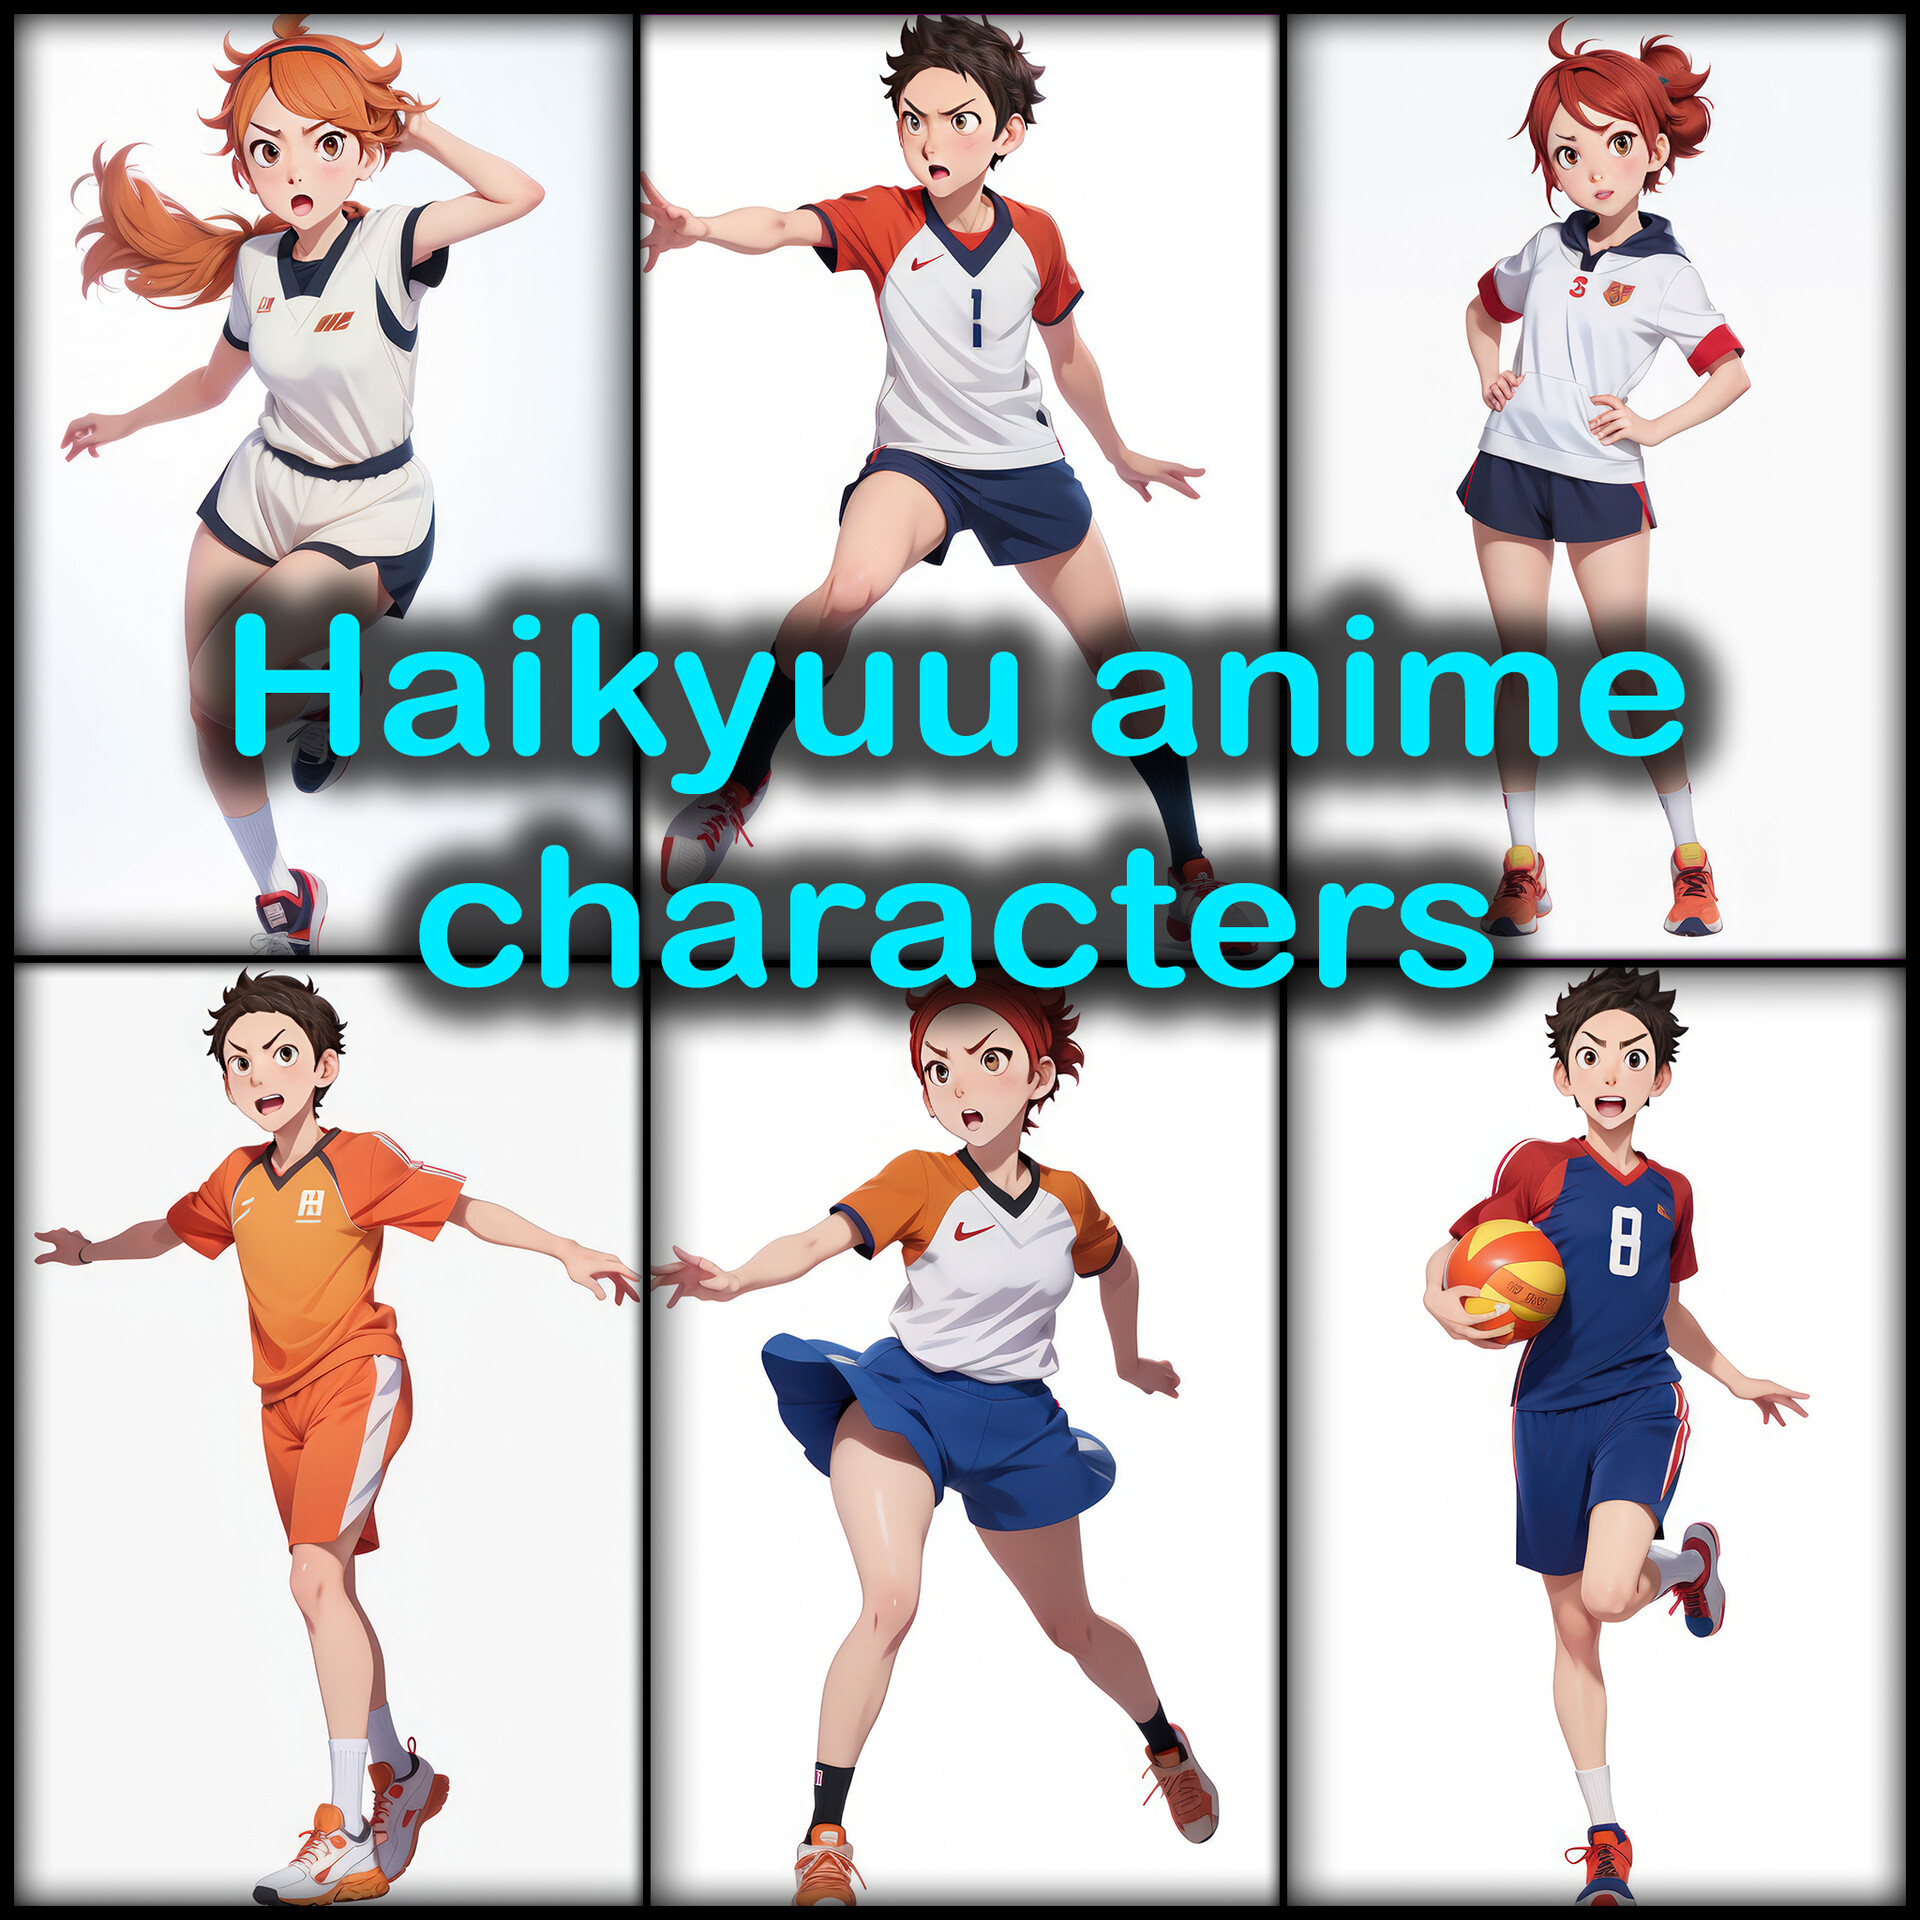 ArtStation - 280 Haikyuu anime characters Reference Pack - 4K